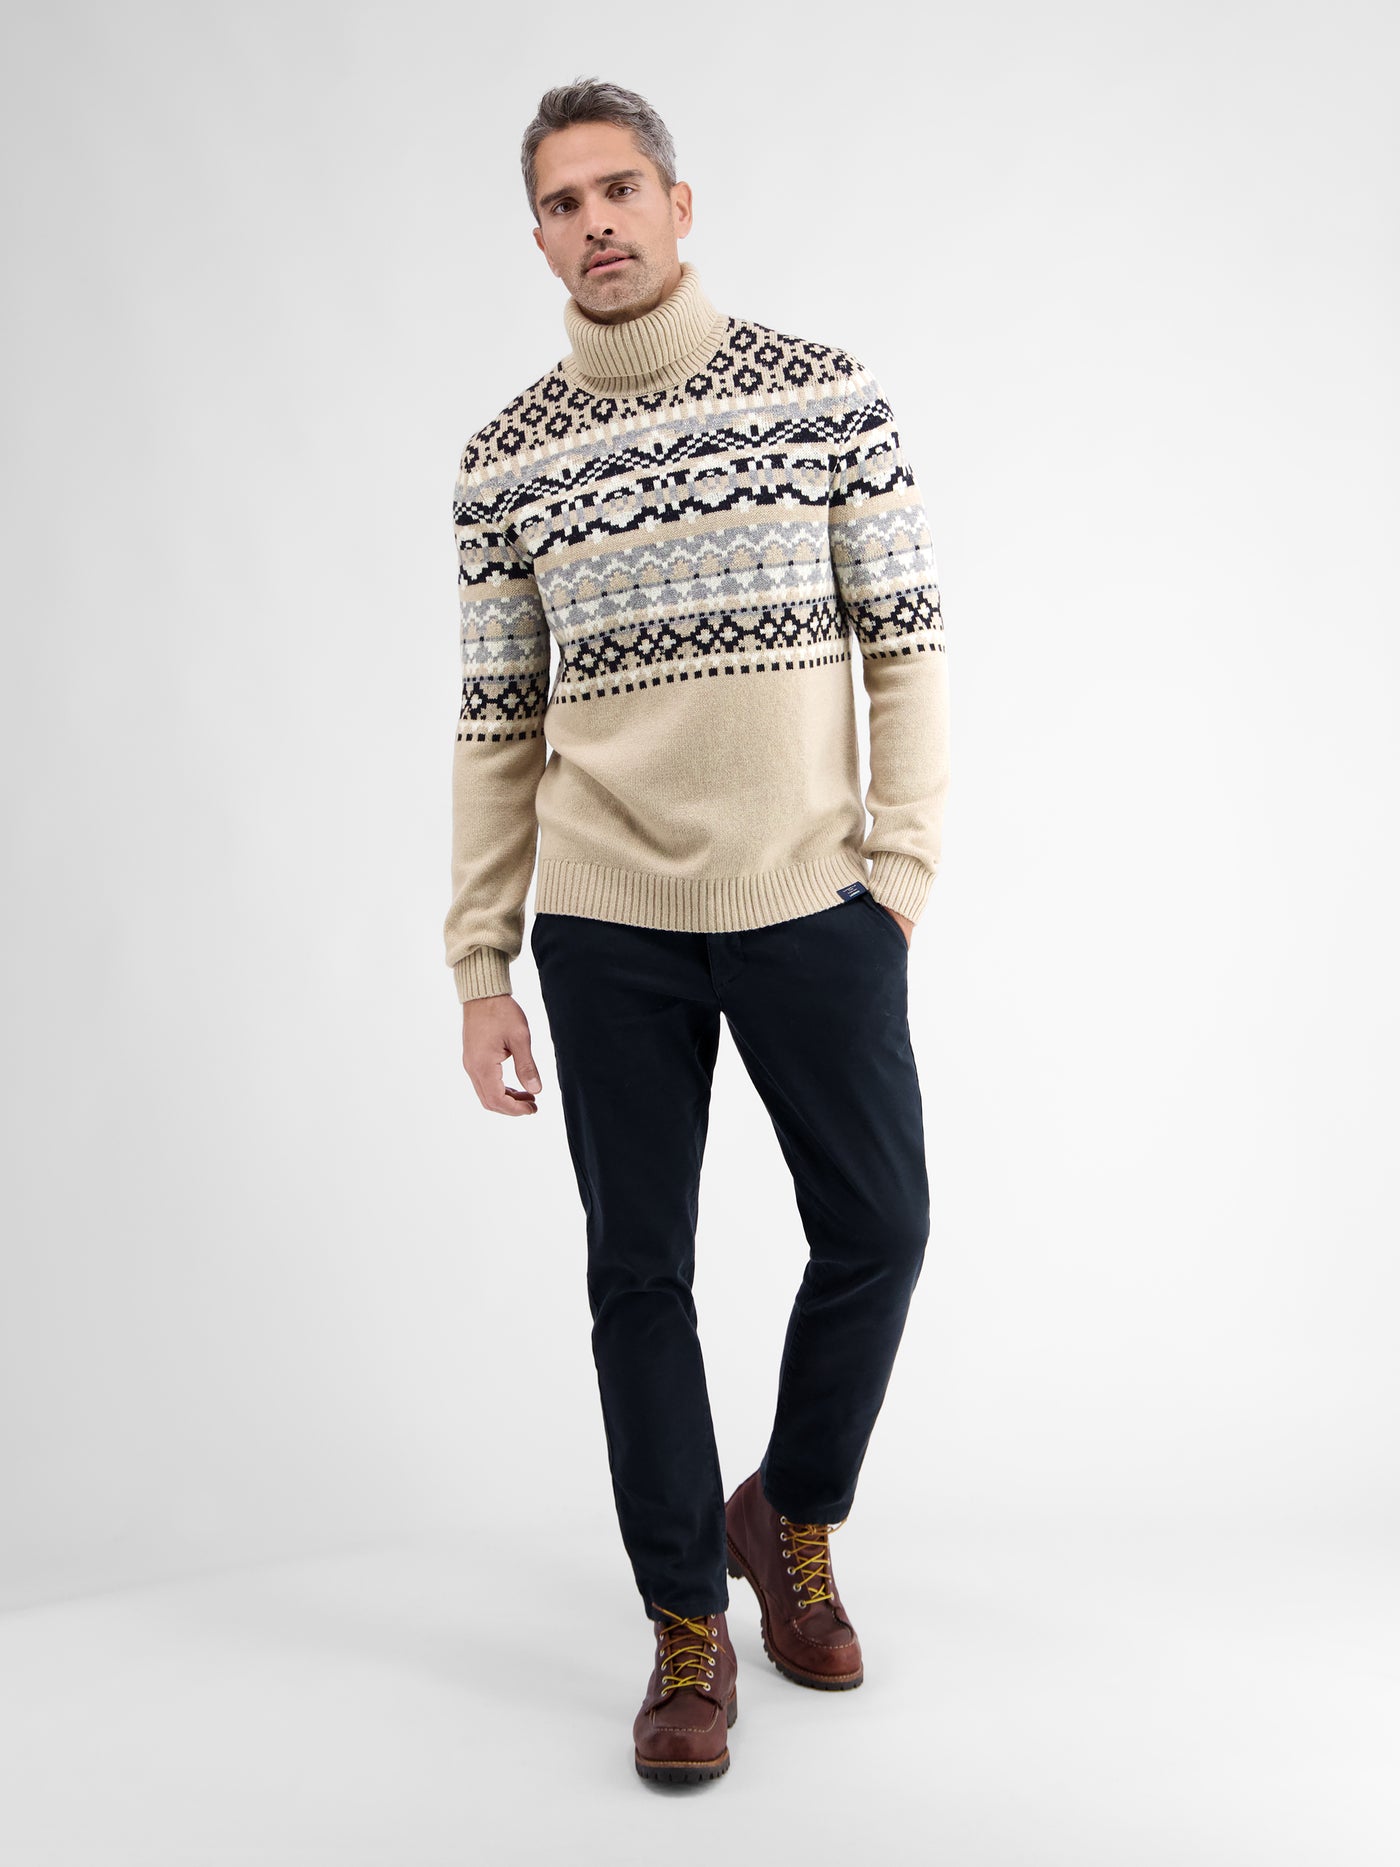 Wool cashmere jacquard sweater. Turtleneck